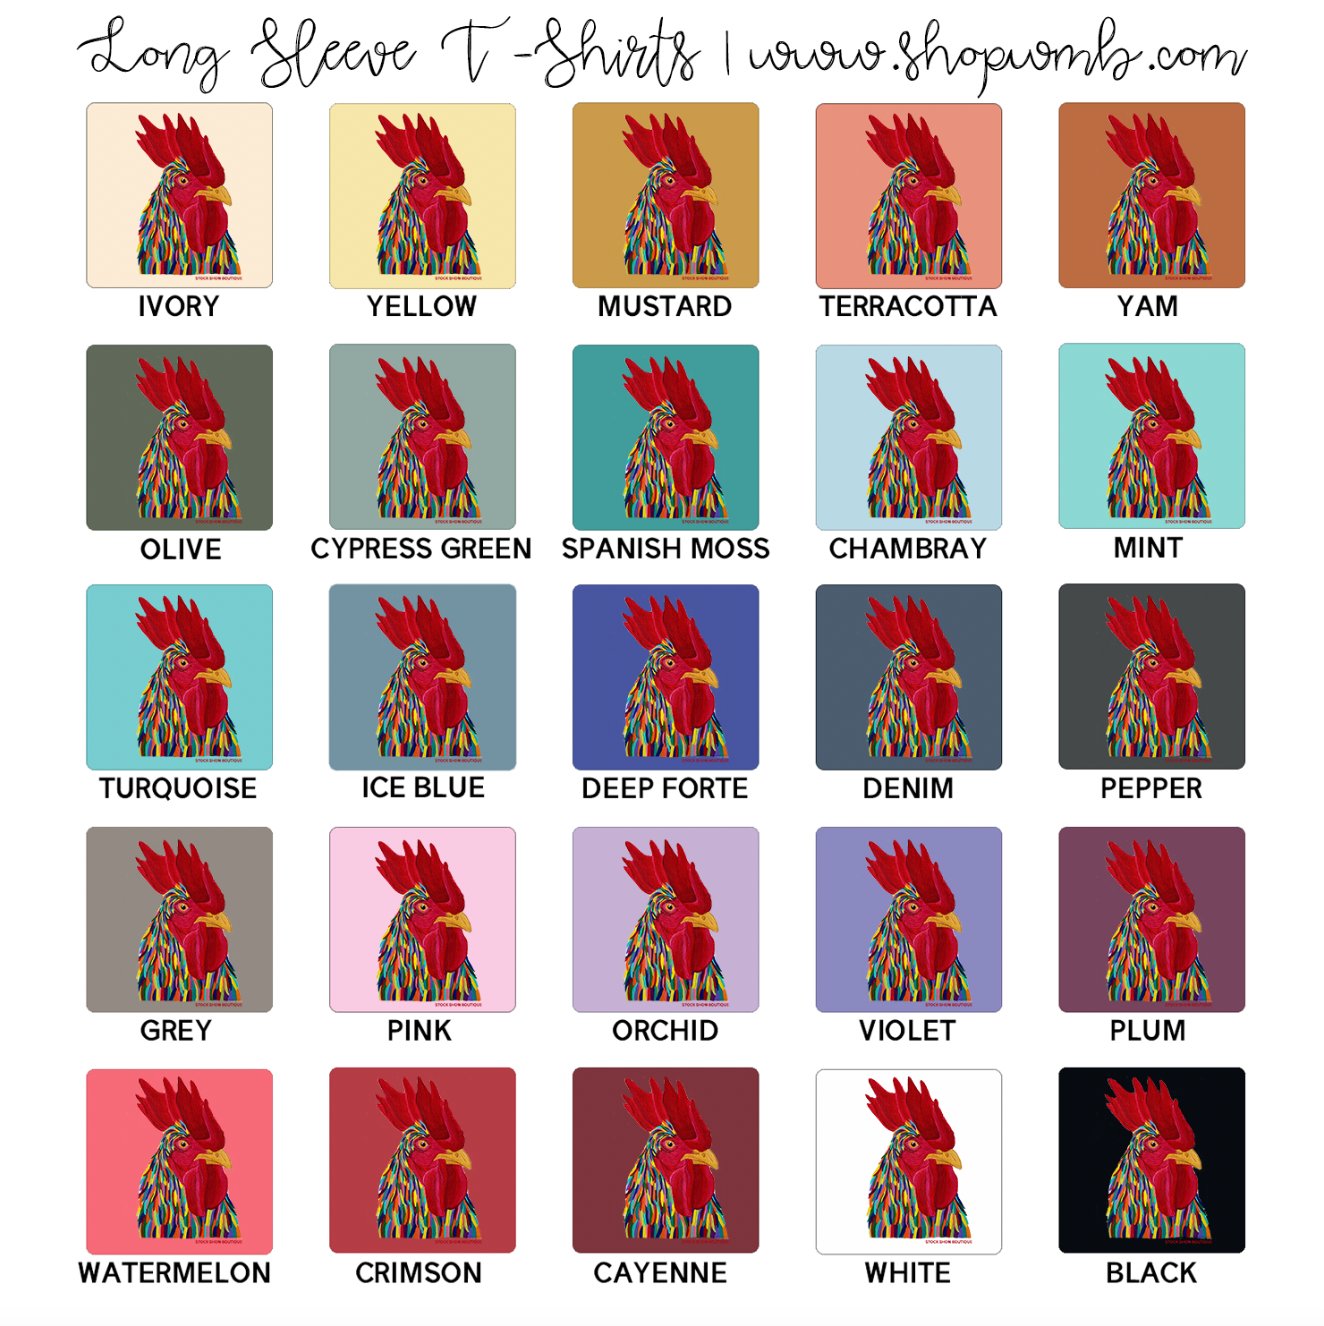 Rainbow Chicken LONG SLEEVE T-Shirt (S-3XL) - Multiple Colors!